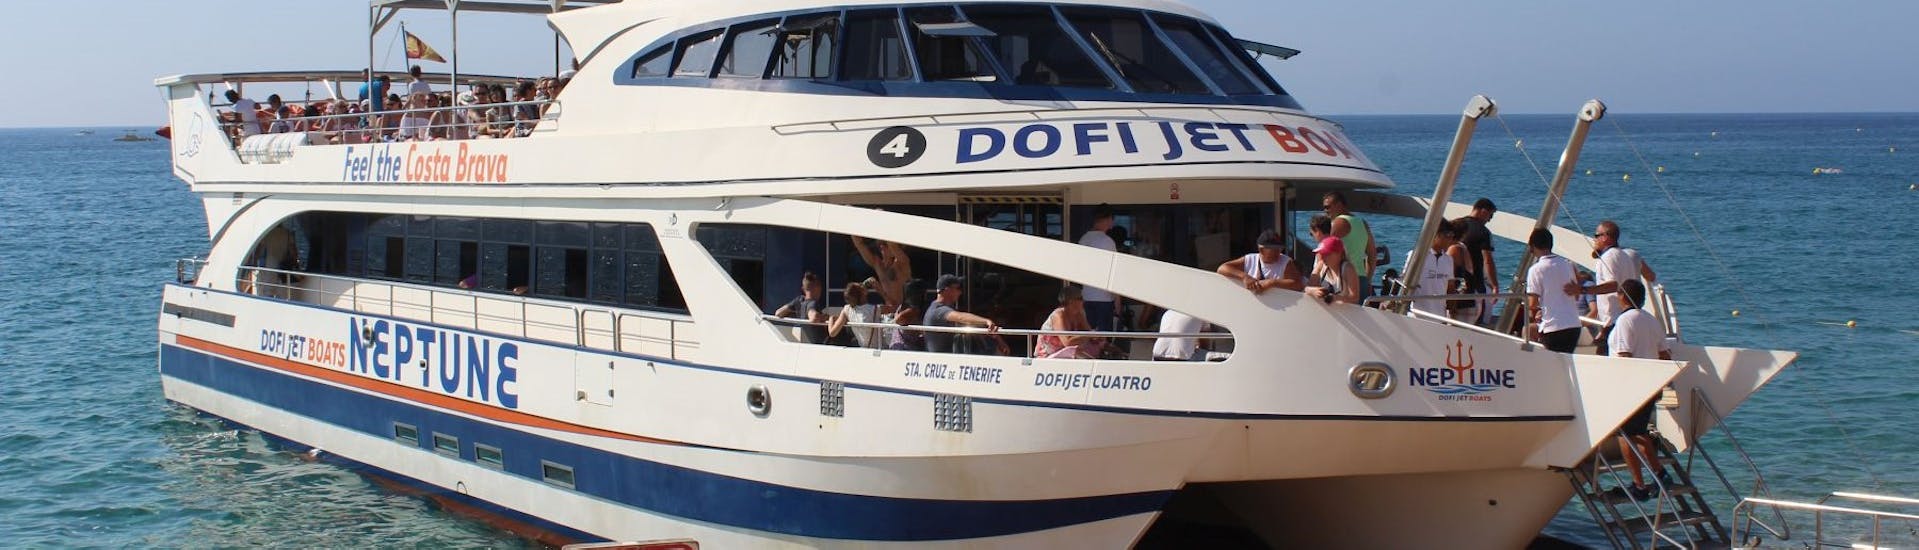 The boat used during the Bus & Boat Trip along Costa Brava to Lloret de Mar & Tossa de Mar.